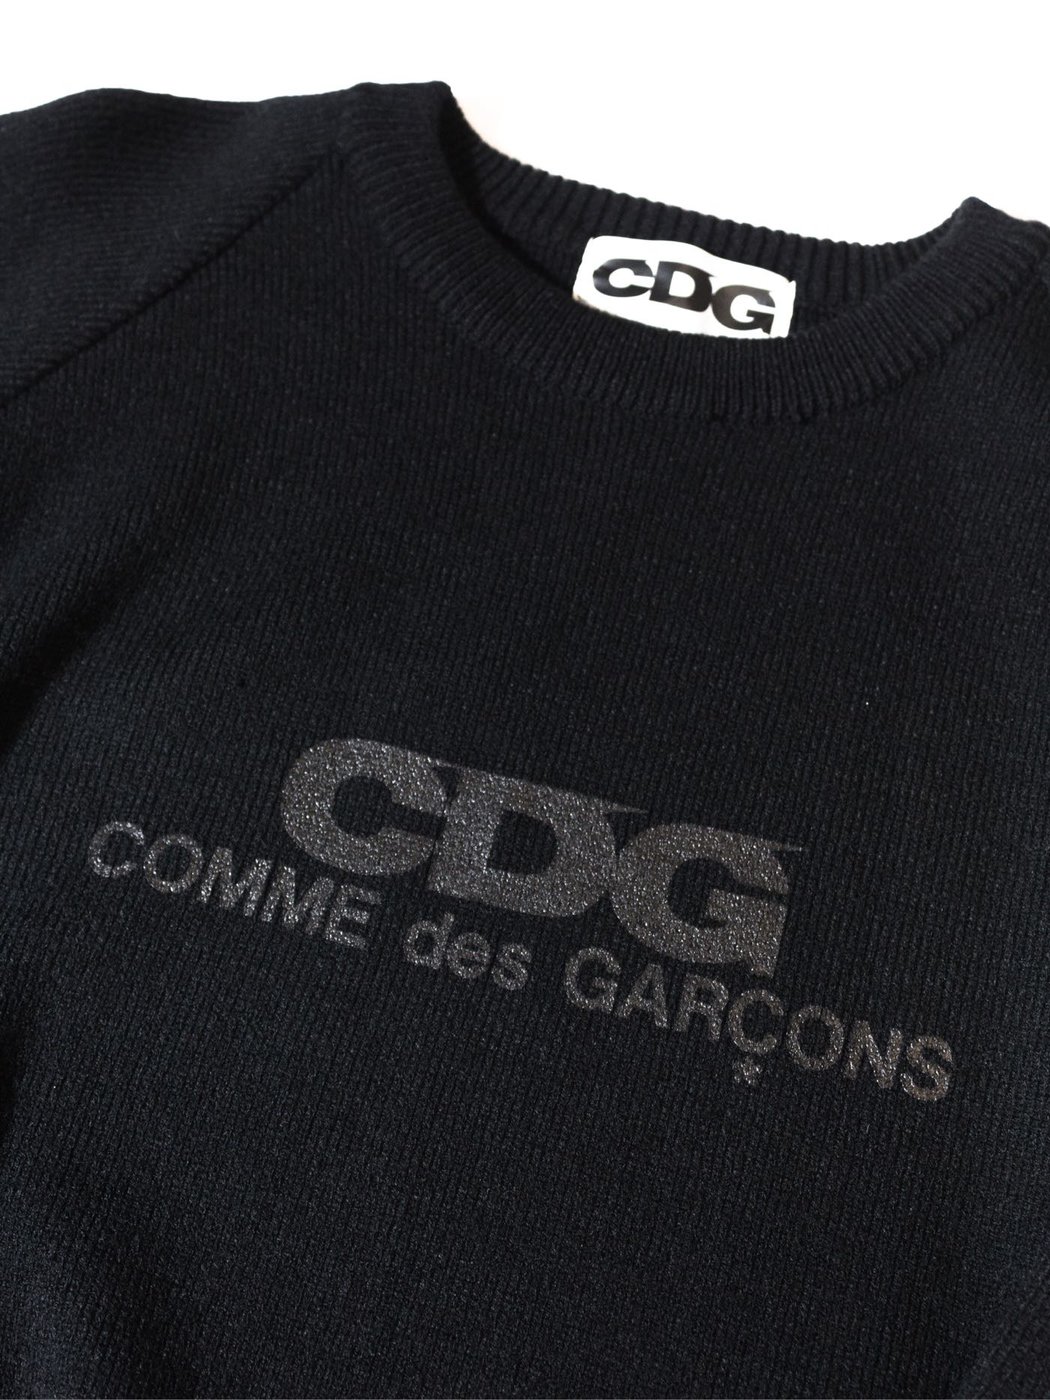 Comme des Garcons Logo Sweater.(Black) 川久保玲CDG 毛衣| Yahoo奇摩拍賣